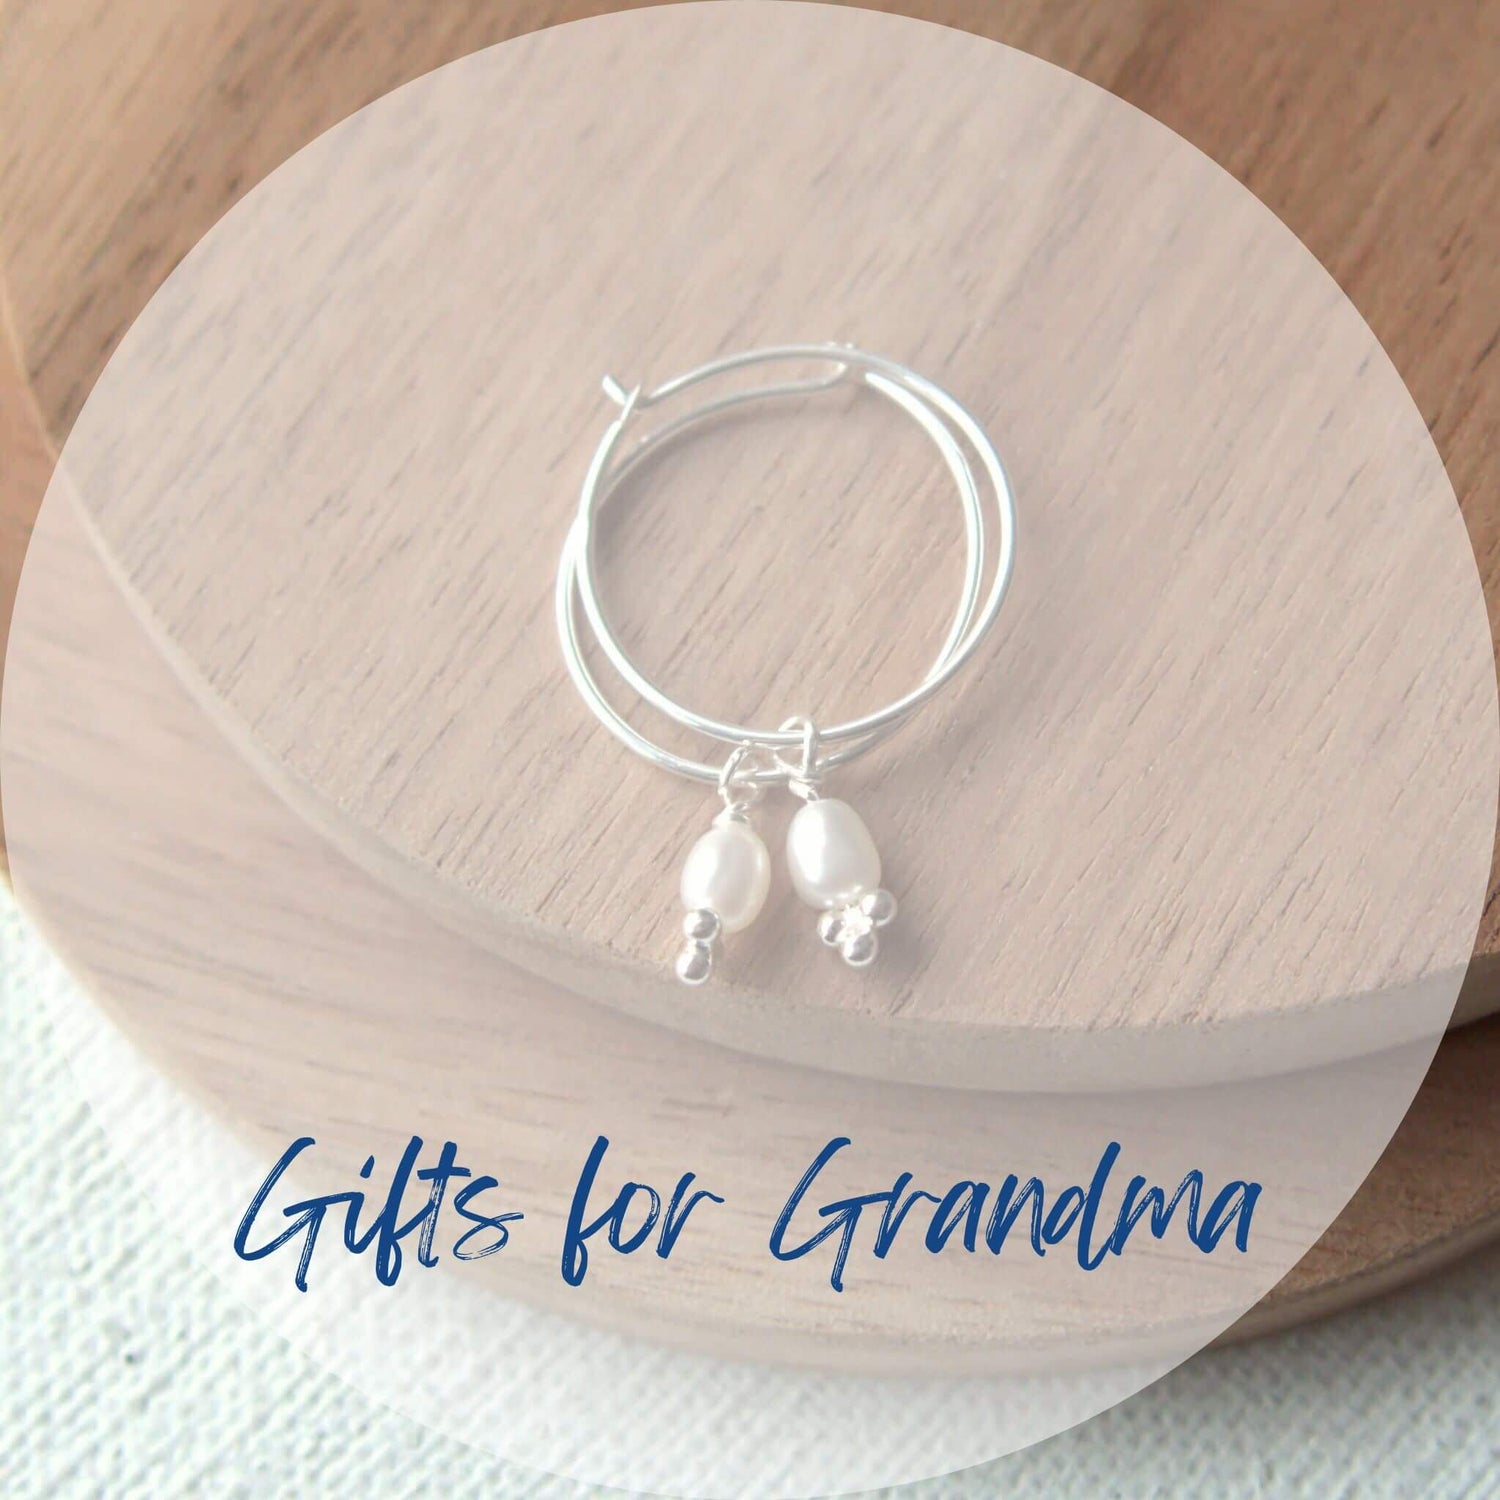 Gifts for Grandma